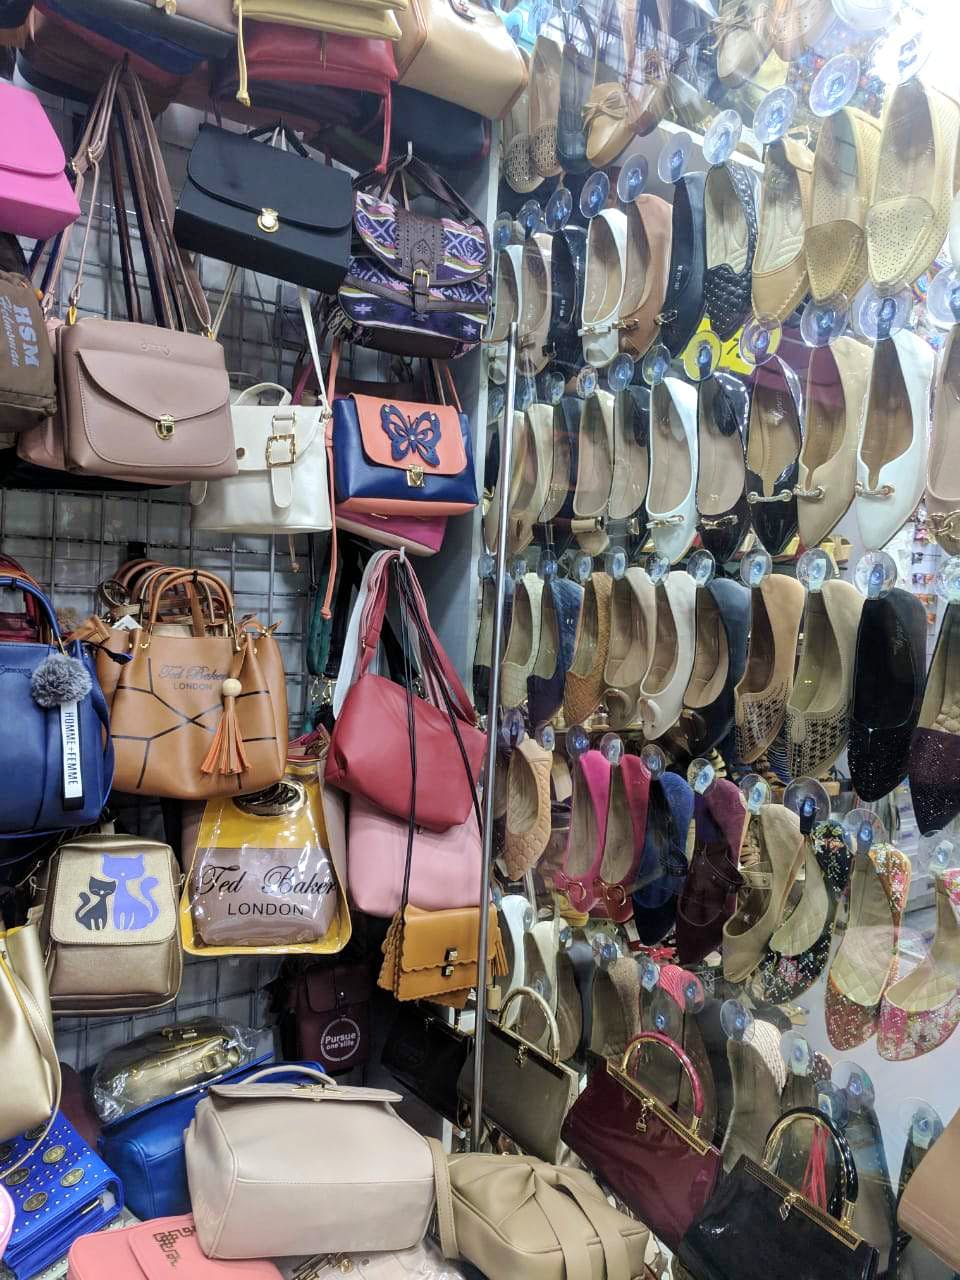 Selling,Bag,Fashion accessory,Marketplace,Market,Outlet store,Baggage,Bazaar,Handbag